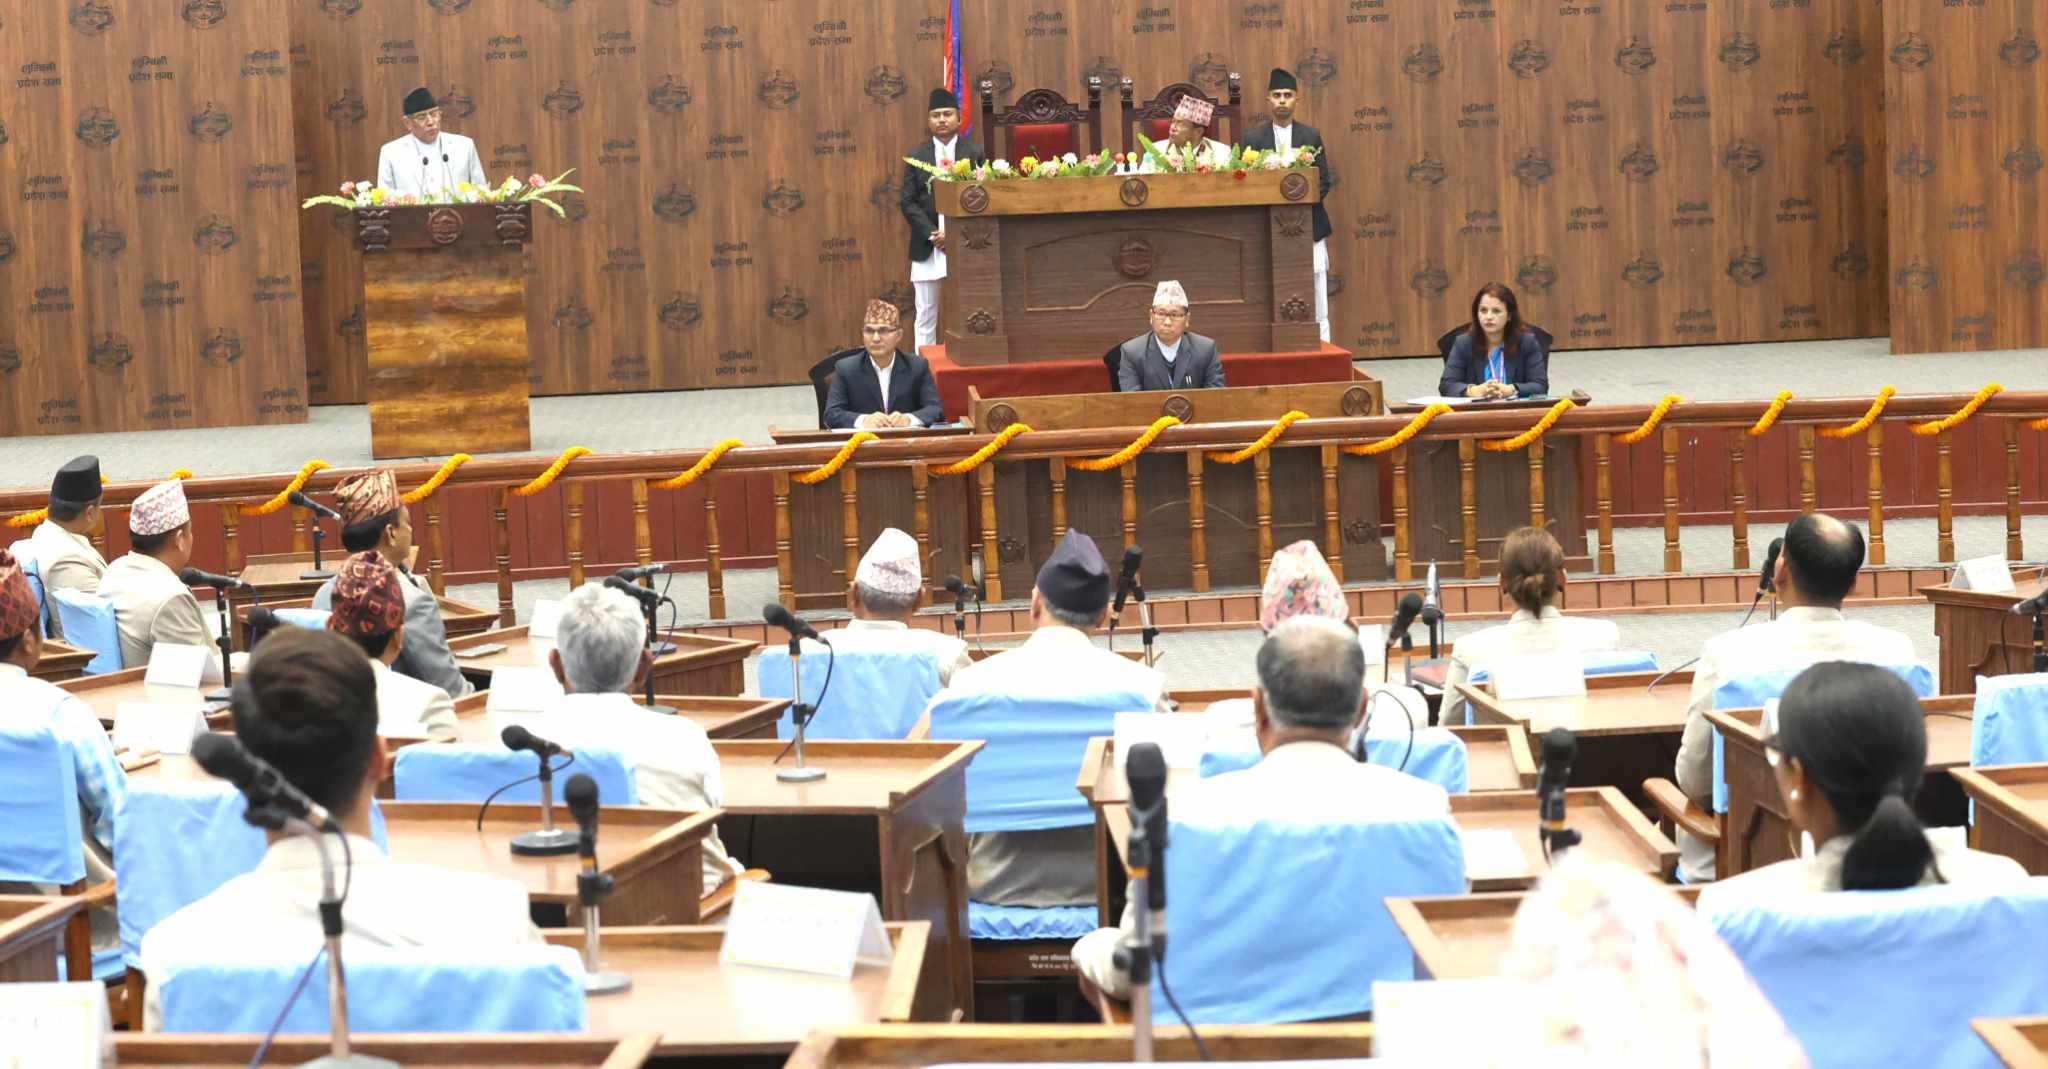 dahal_lumbini parliament (1).jpg